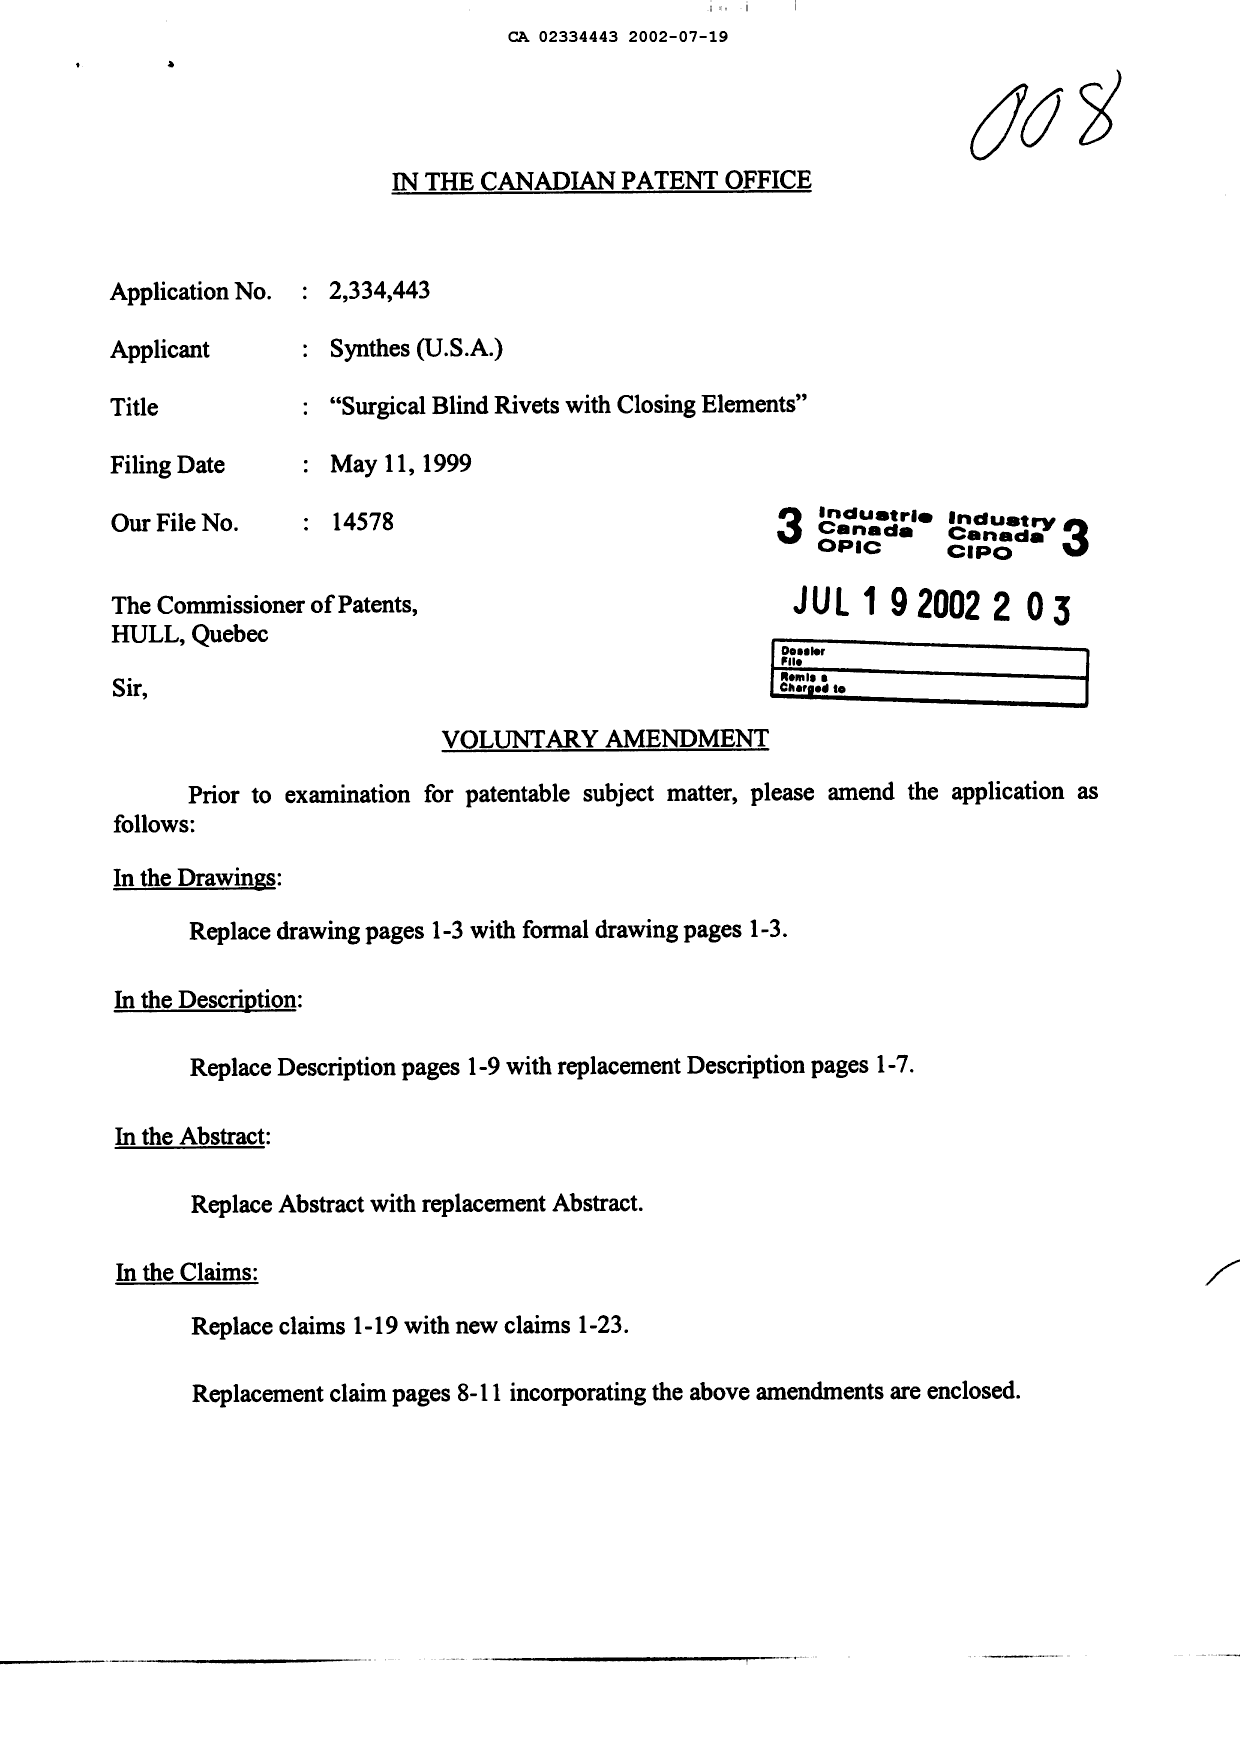 Canadian Patent Document 2334443. Prosecution-Amendment 20020719. Image 1 of 17